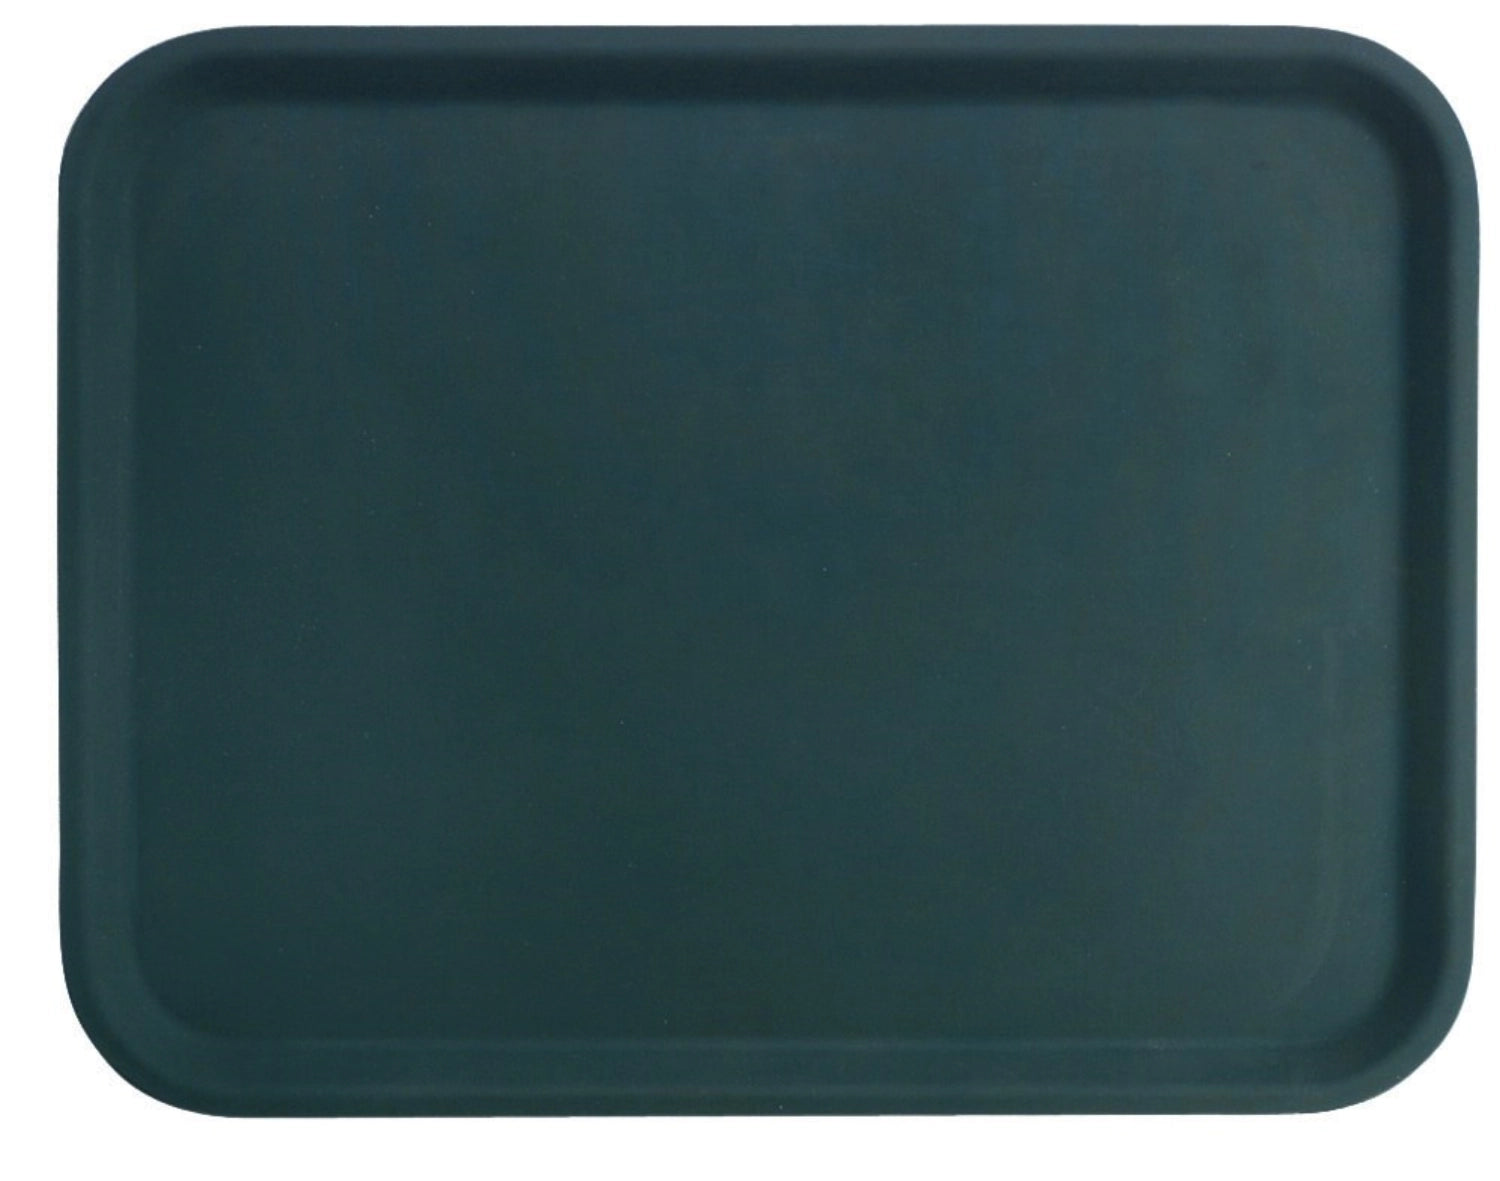 Tablett antirutschbeschichtet schwarz GN 1/1 32.5x53cm - KAQTU Design